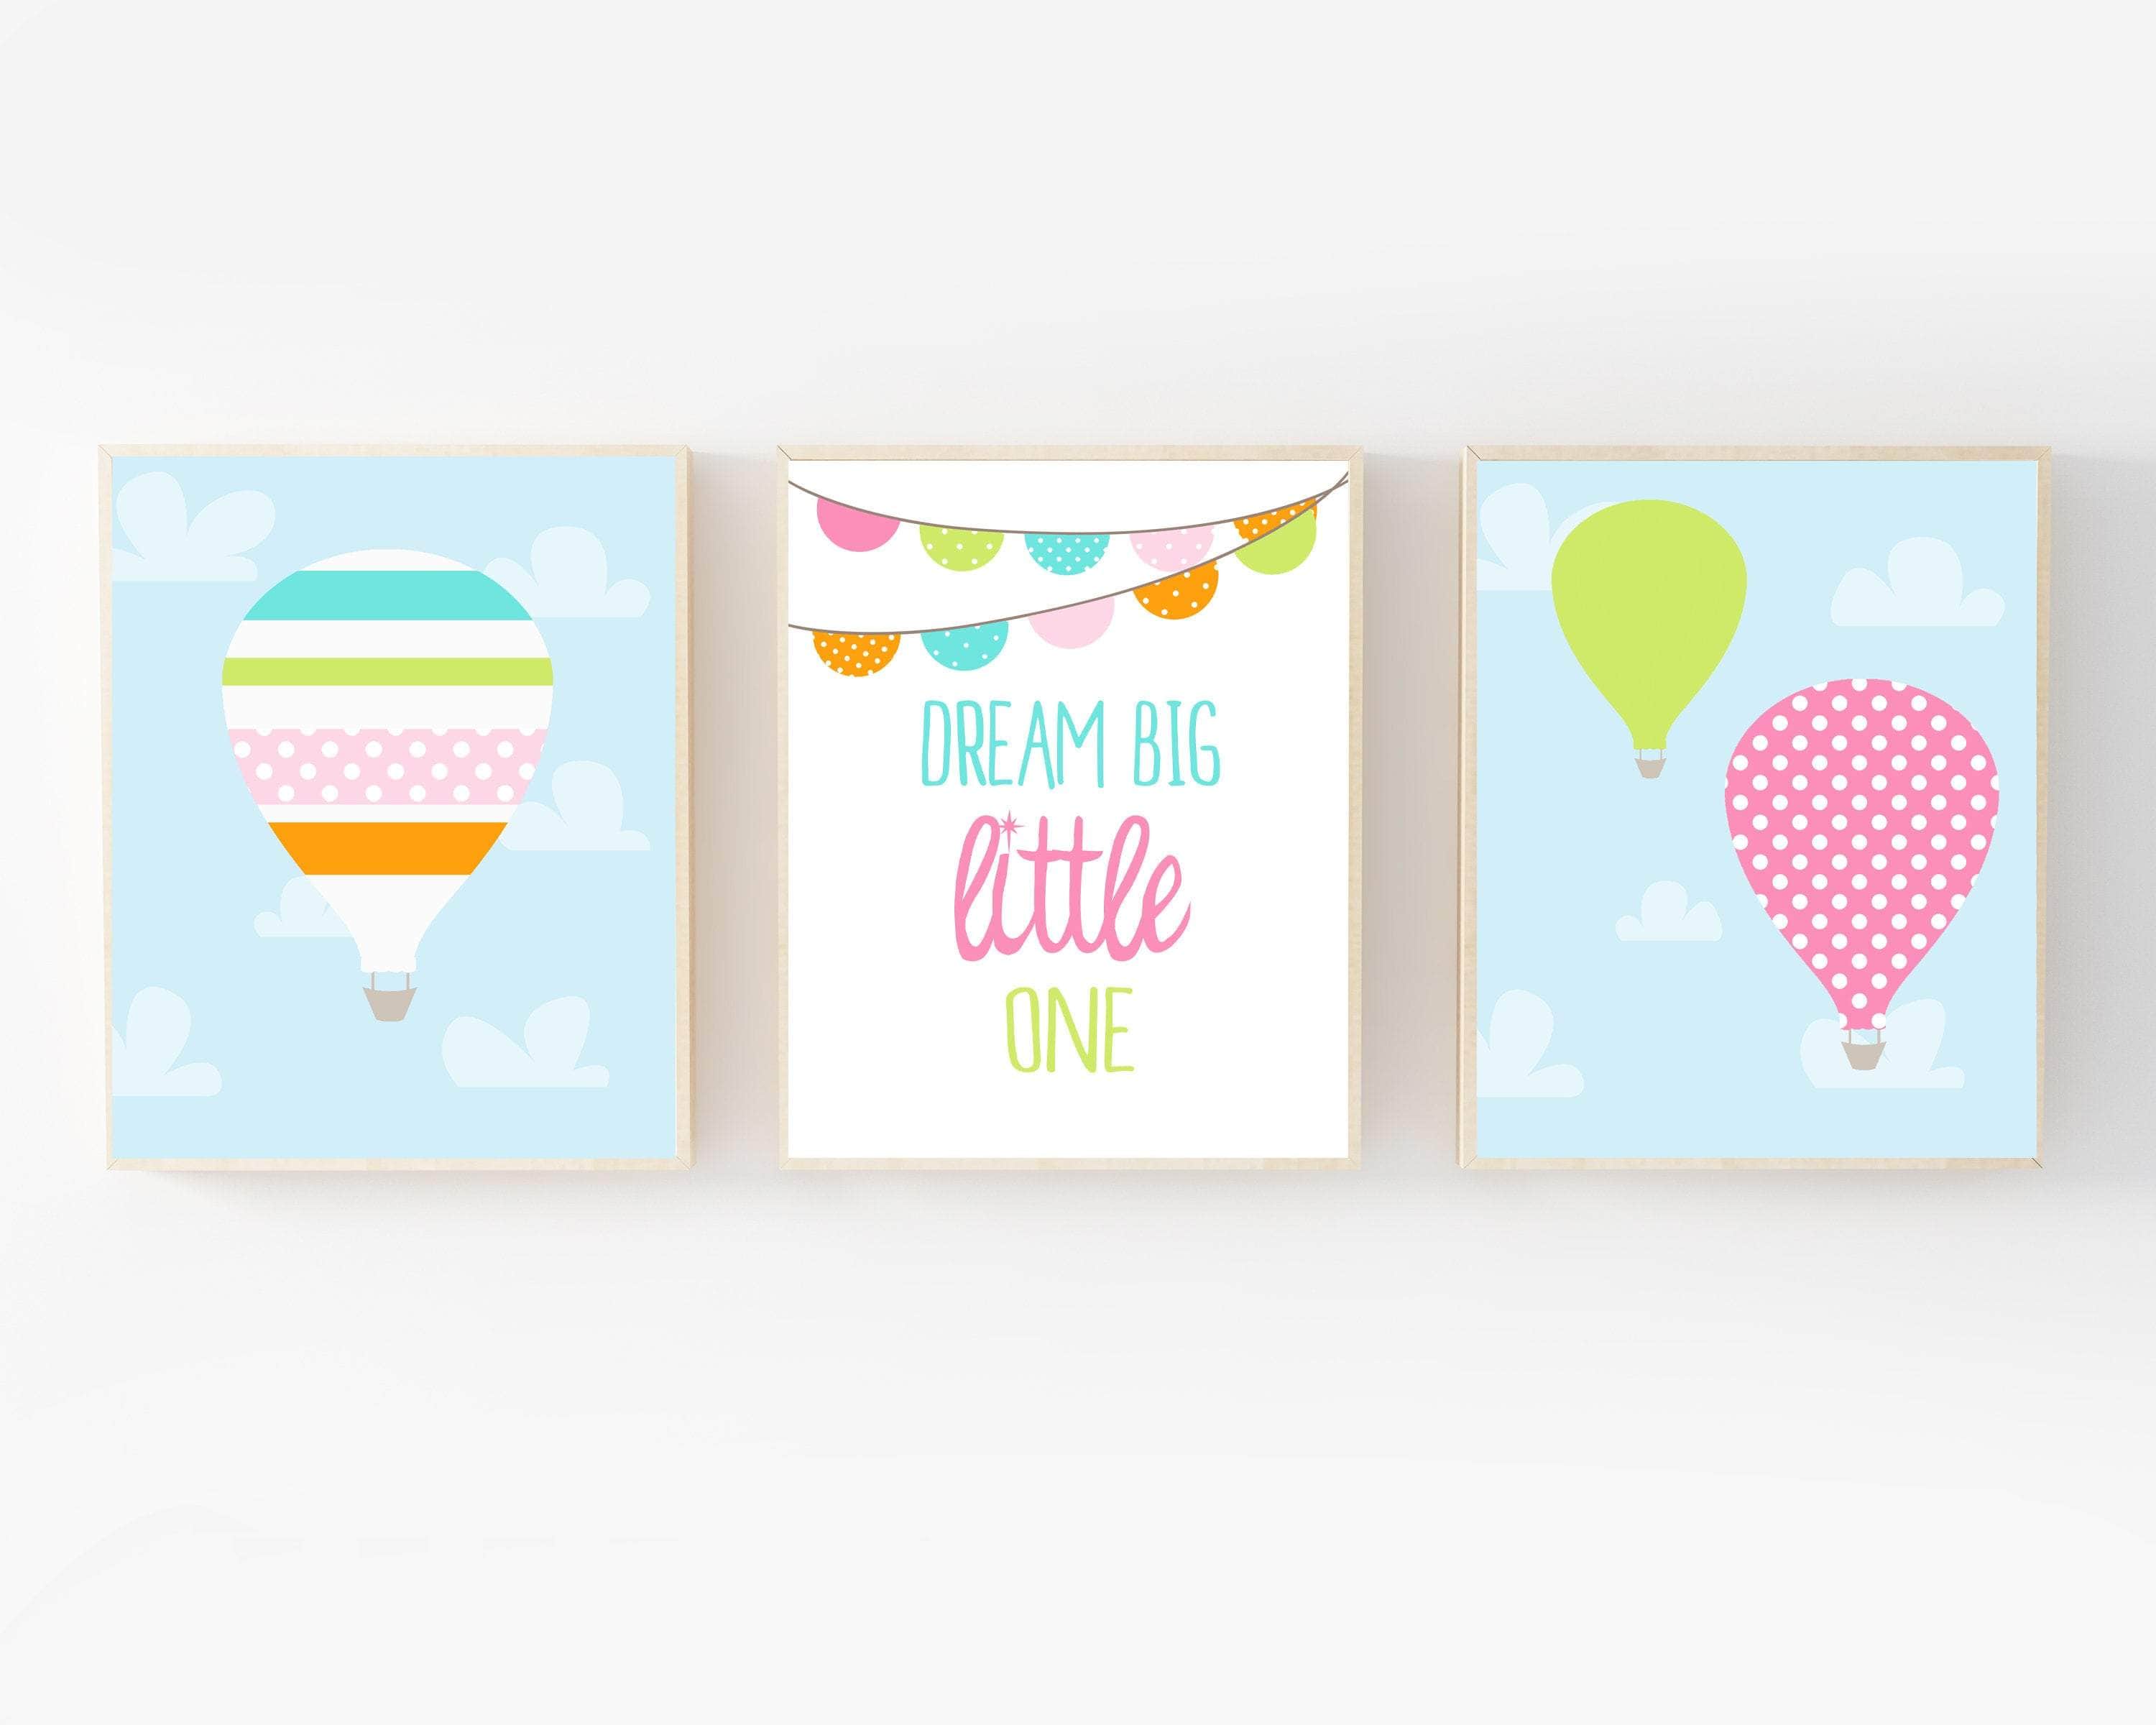 Dream Big Little One with Hot air balloons | Set of 3 nursery art print baby nursery bedroom decor